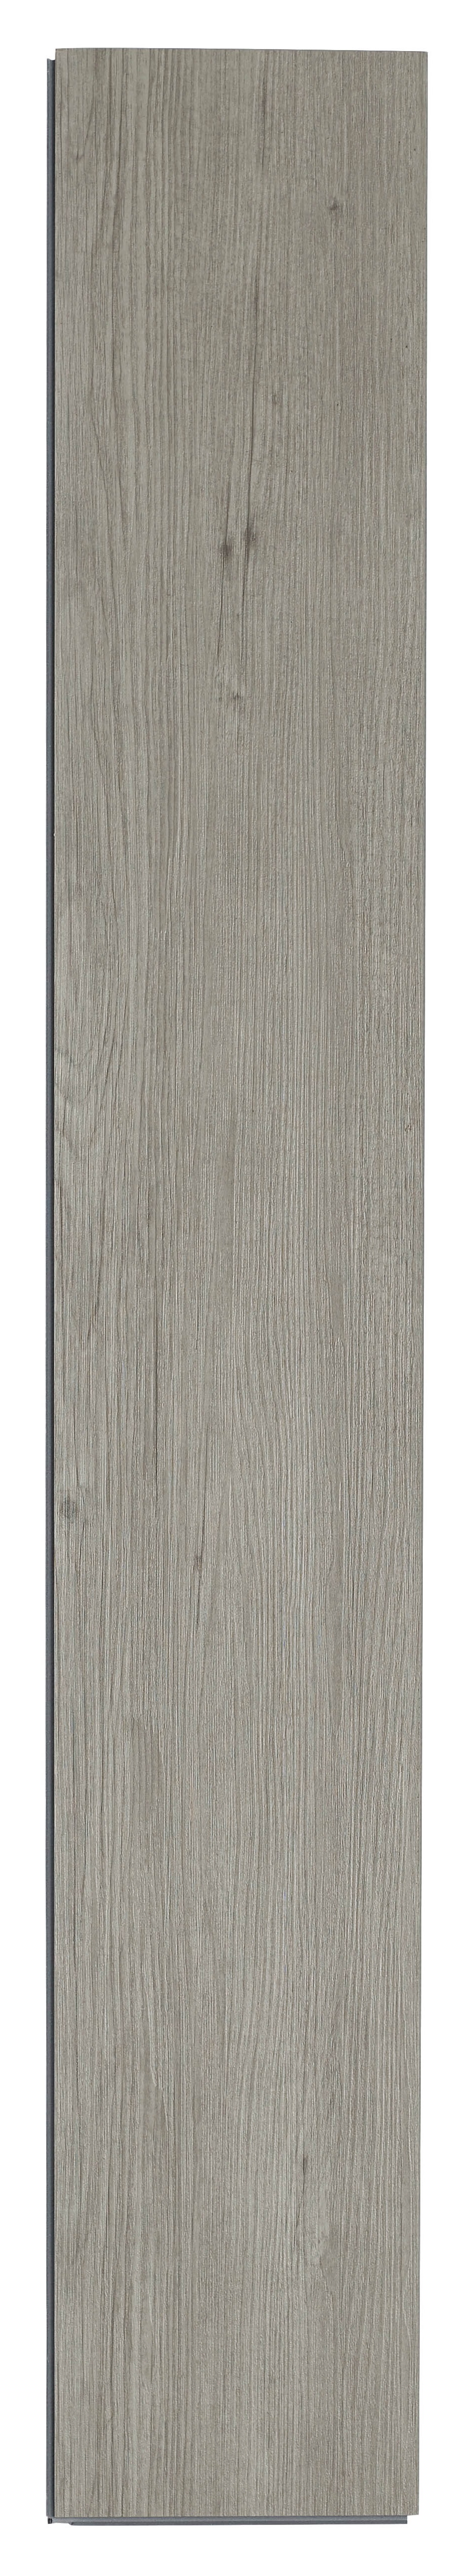 Hewitt Silver Birch SPC Flooring with Integrated Underlay - Sample